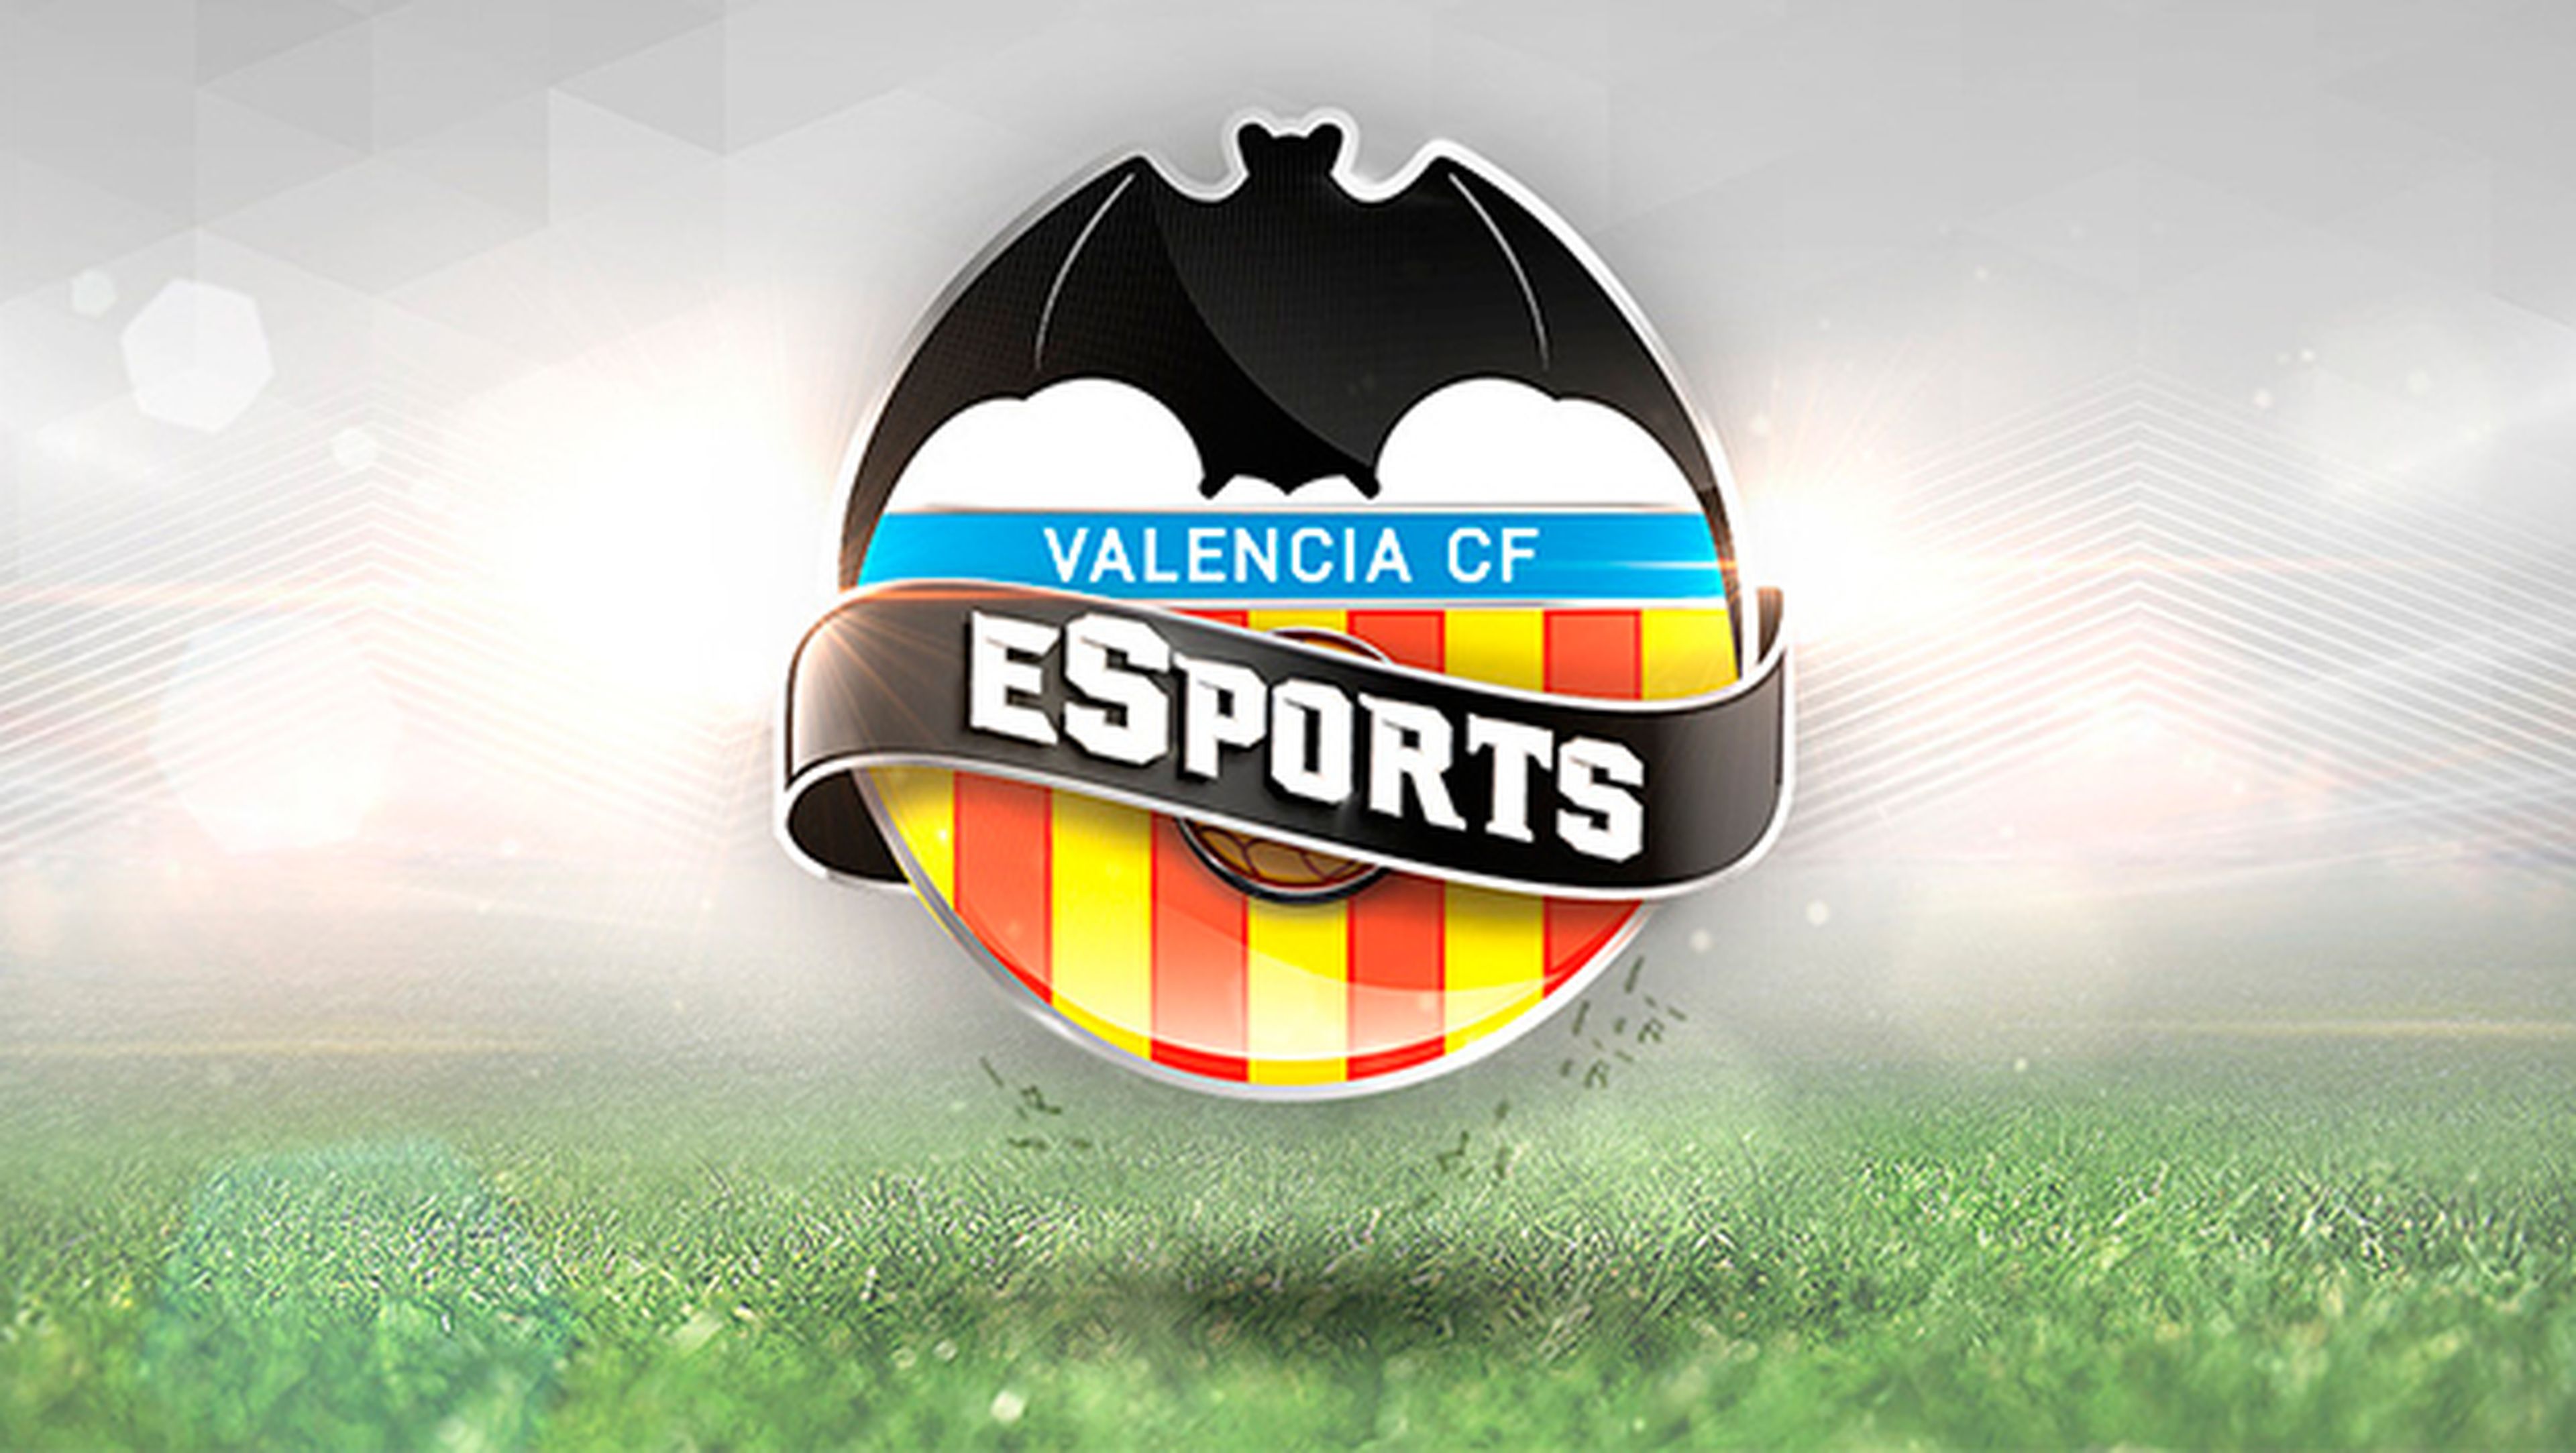 Valencia Club de Fútbol eSports